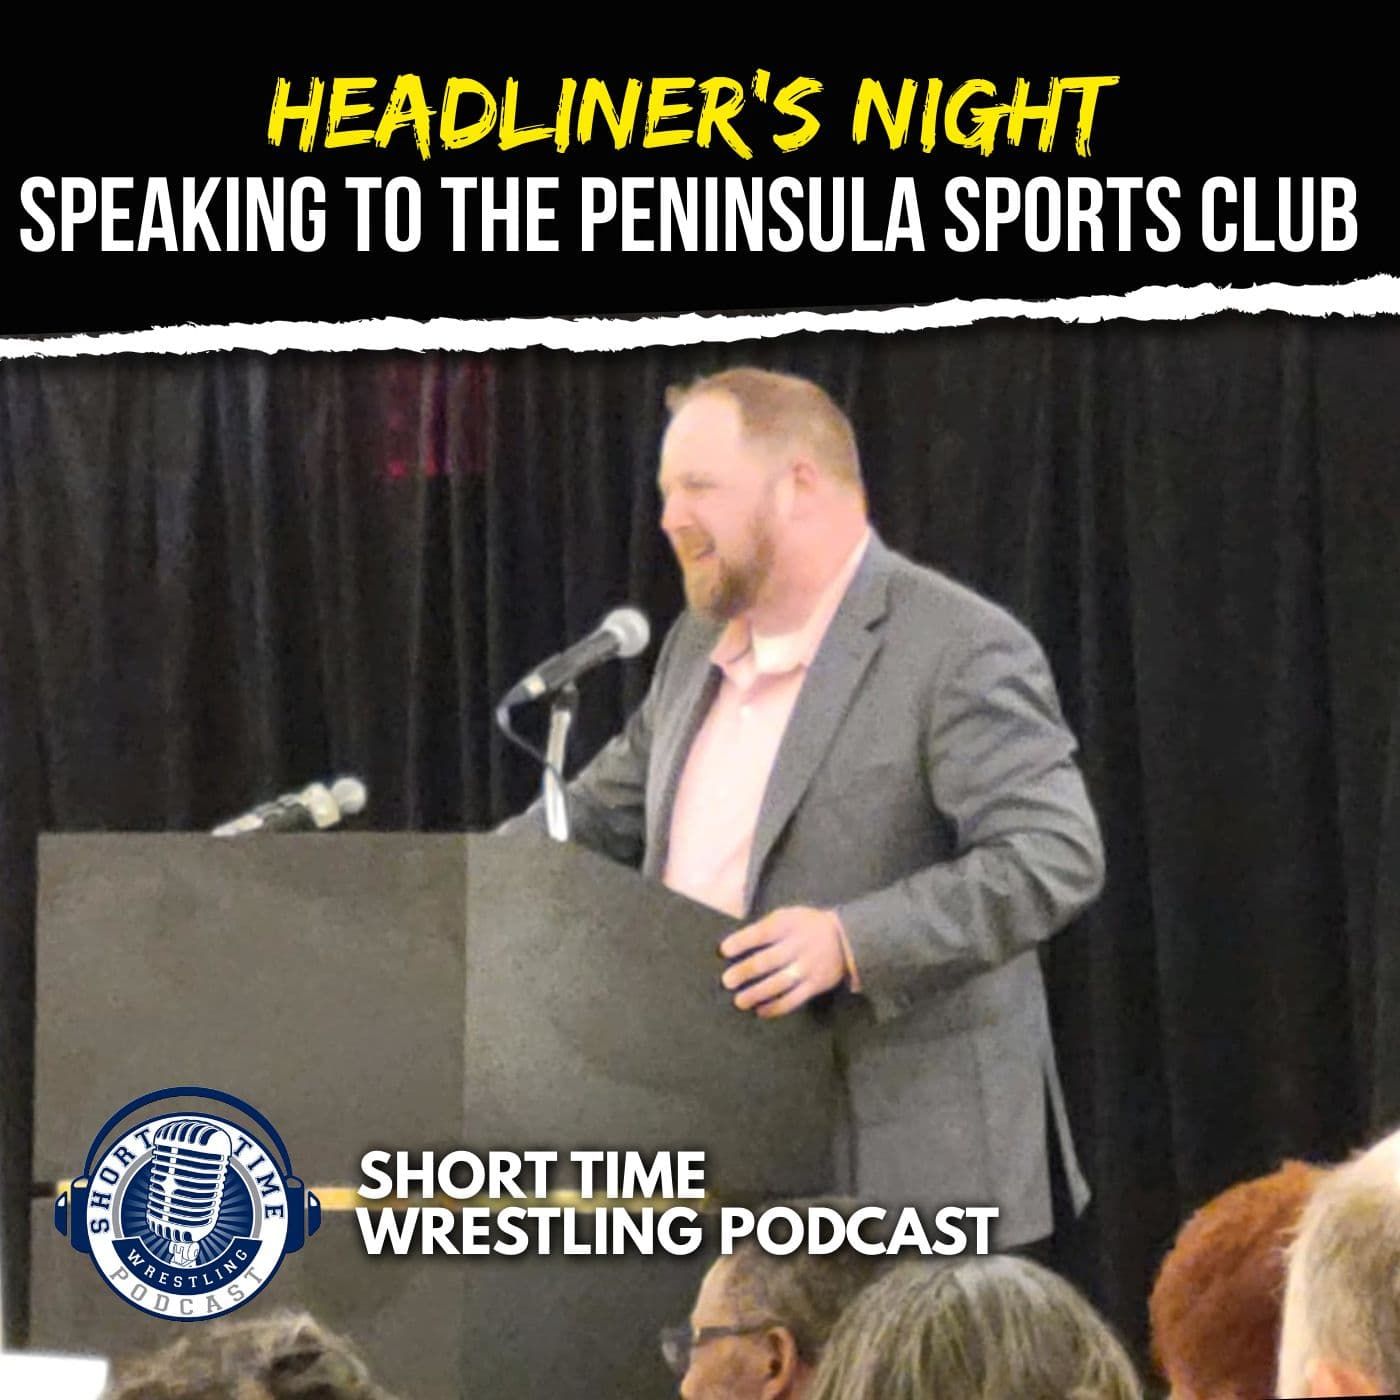 Speaking at the Peninsula Sports Club’s Headliner’s Night